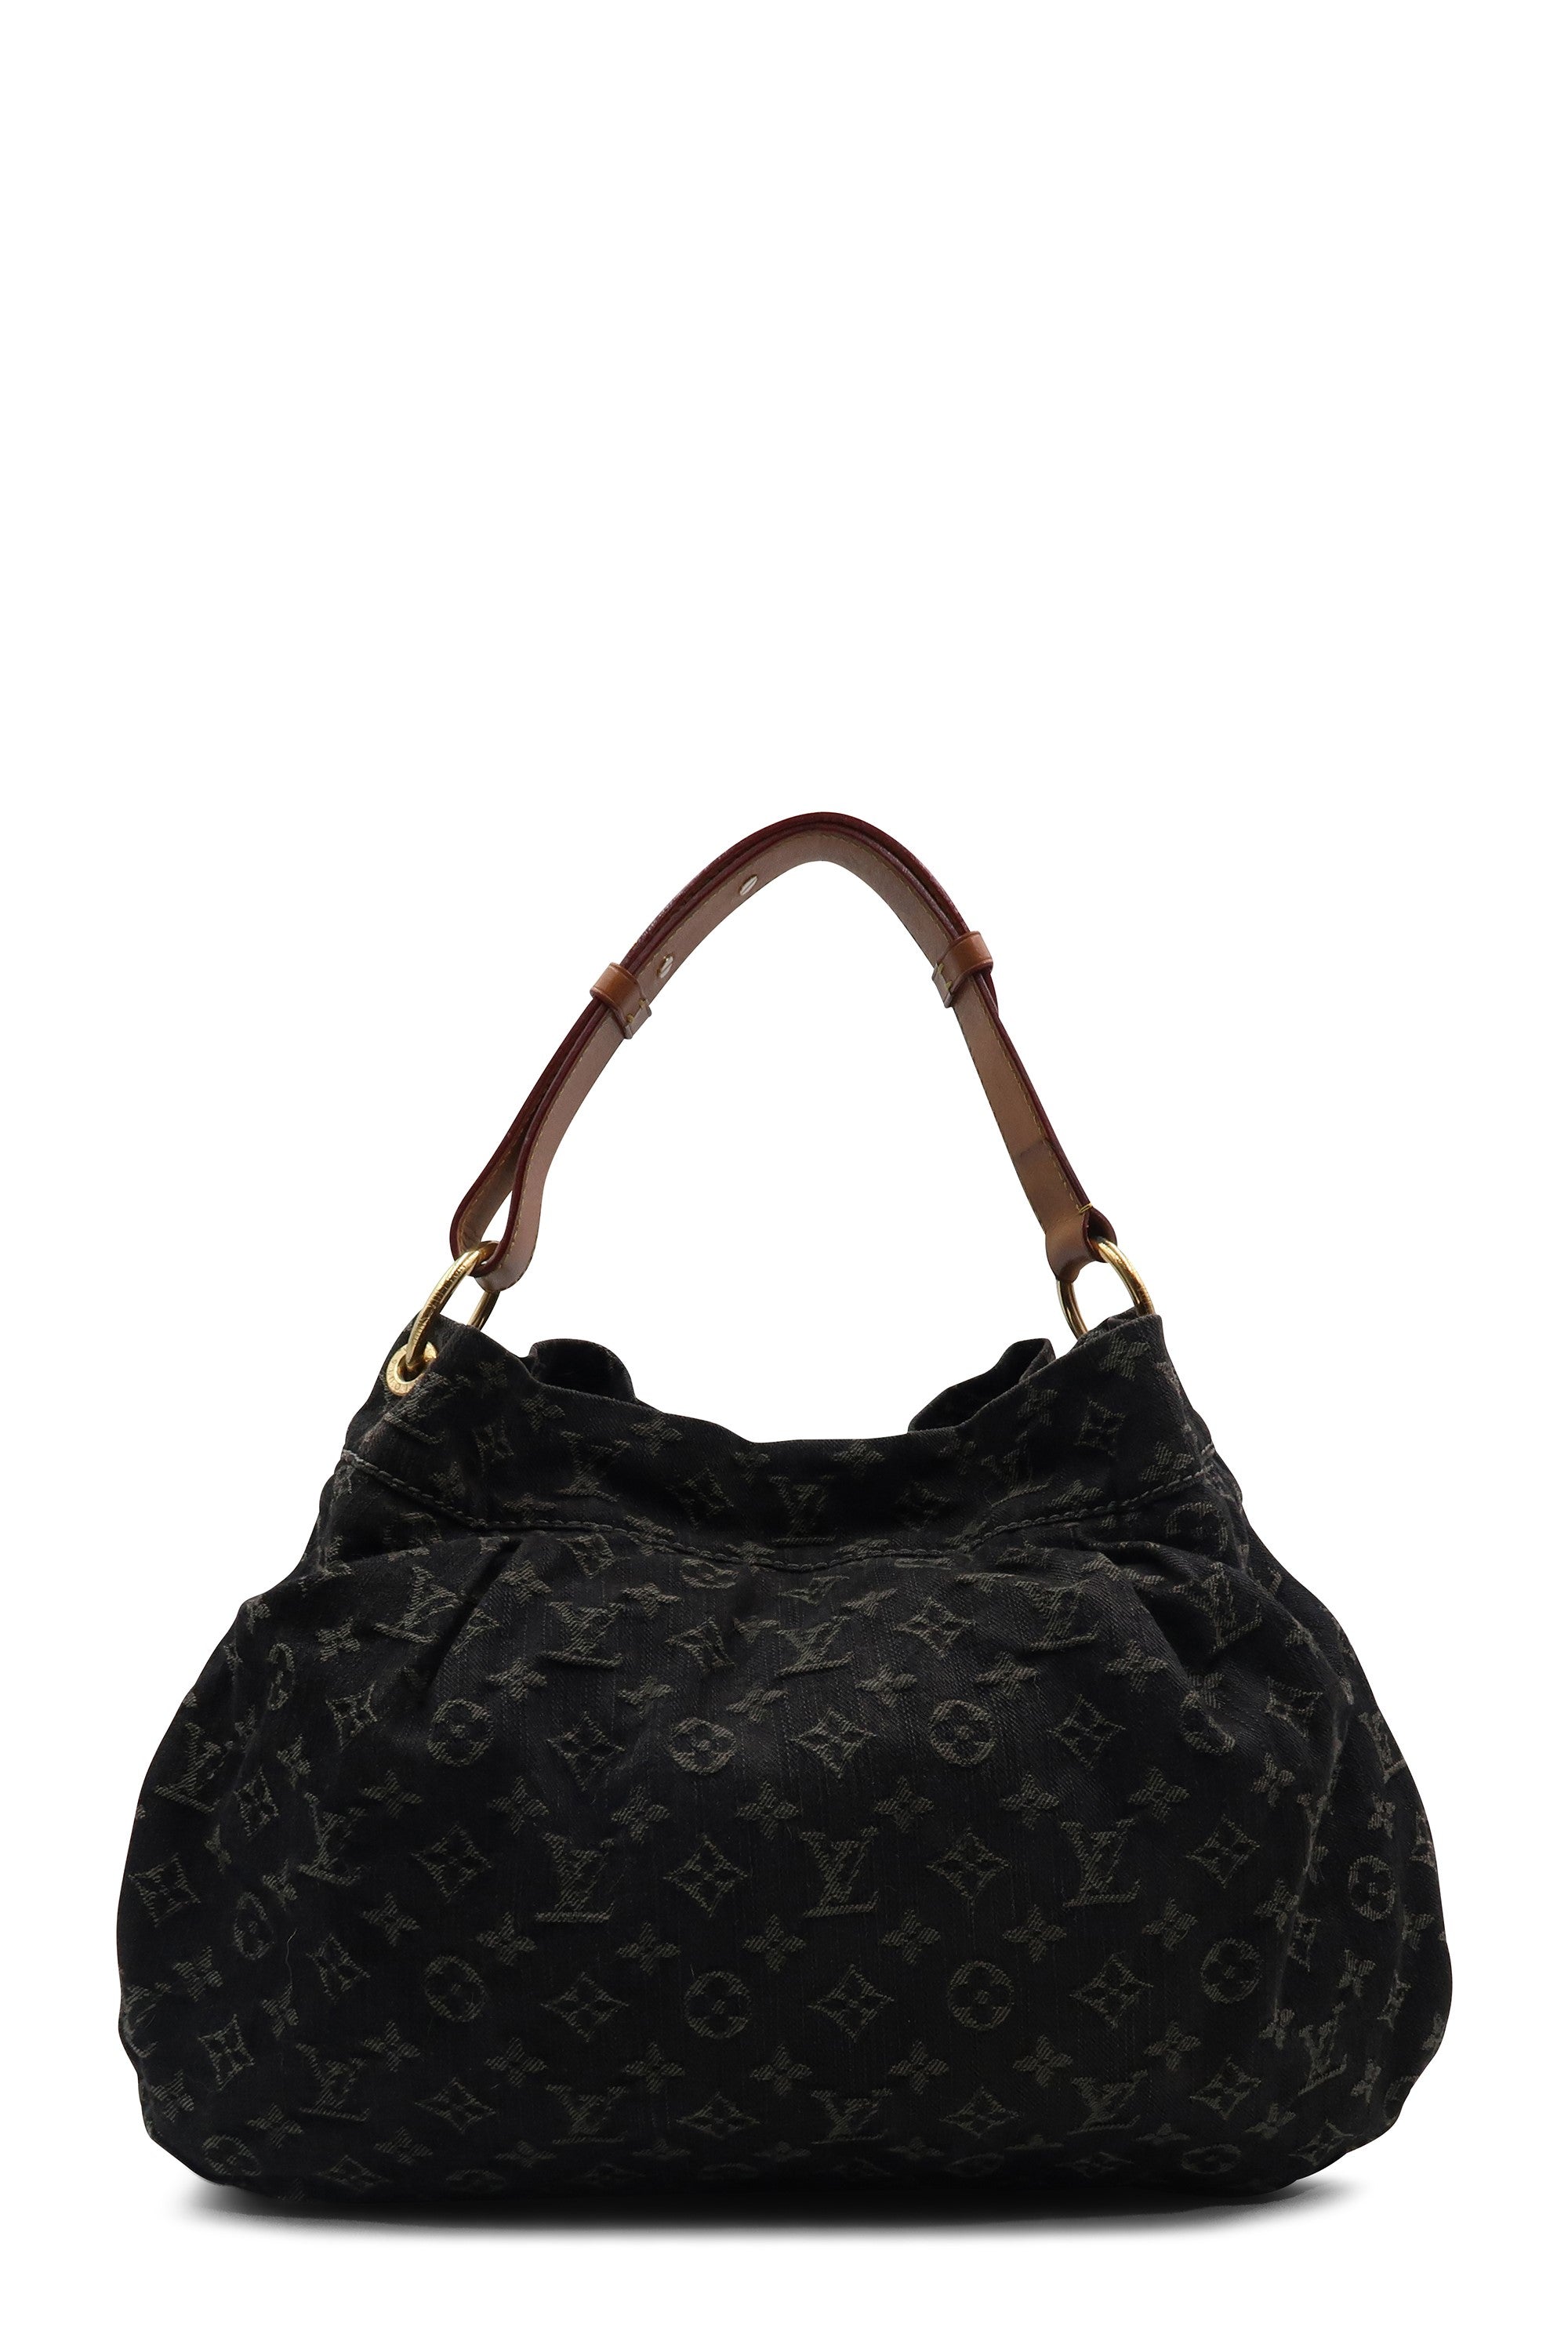 Louis Vuitton Denim Daily PM Monogram Hobo Bag Black